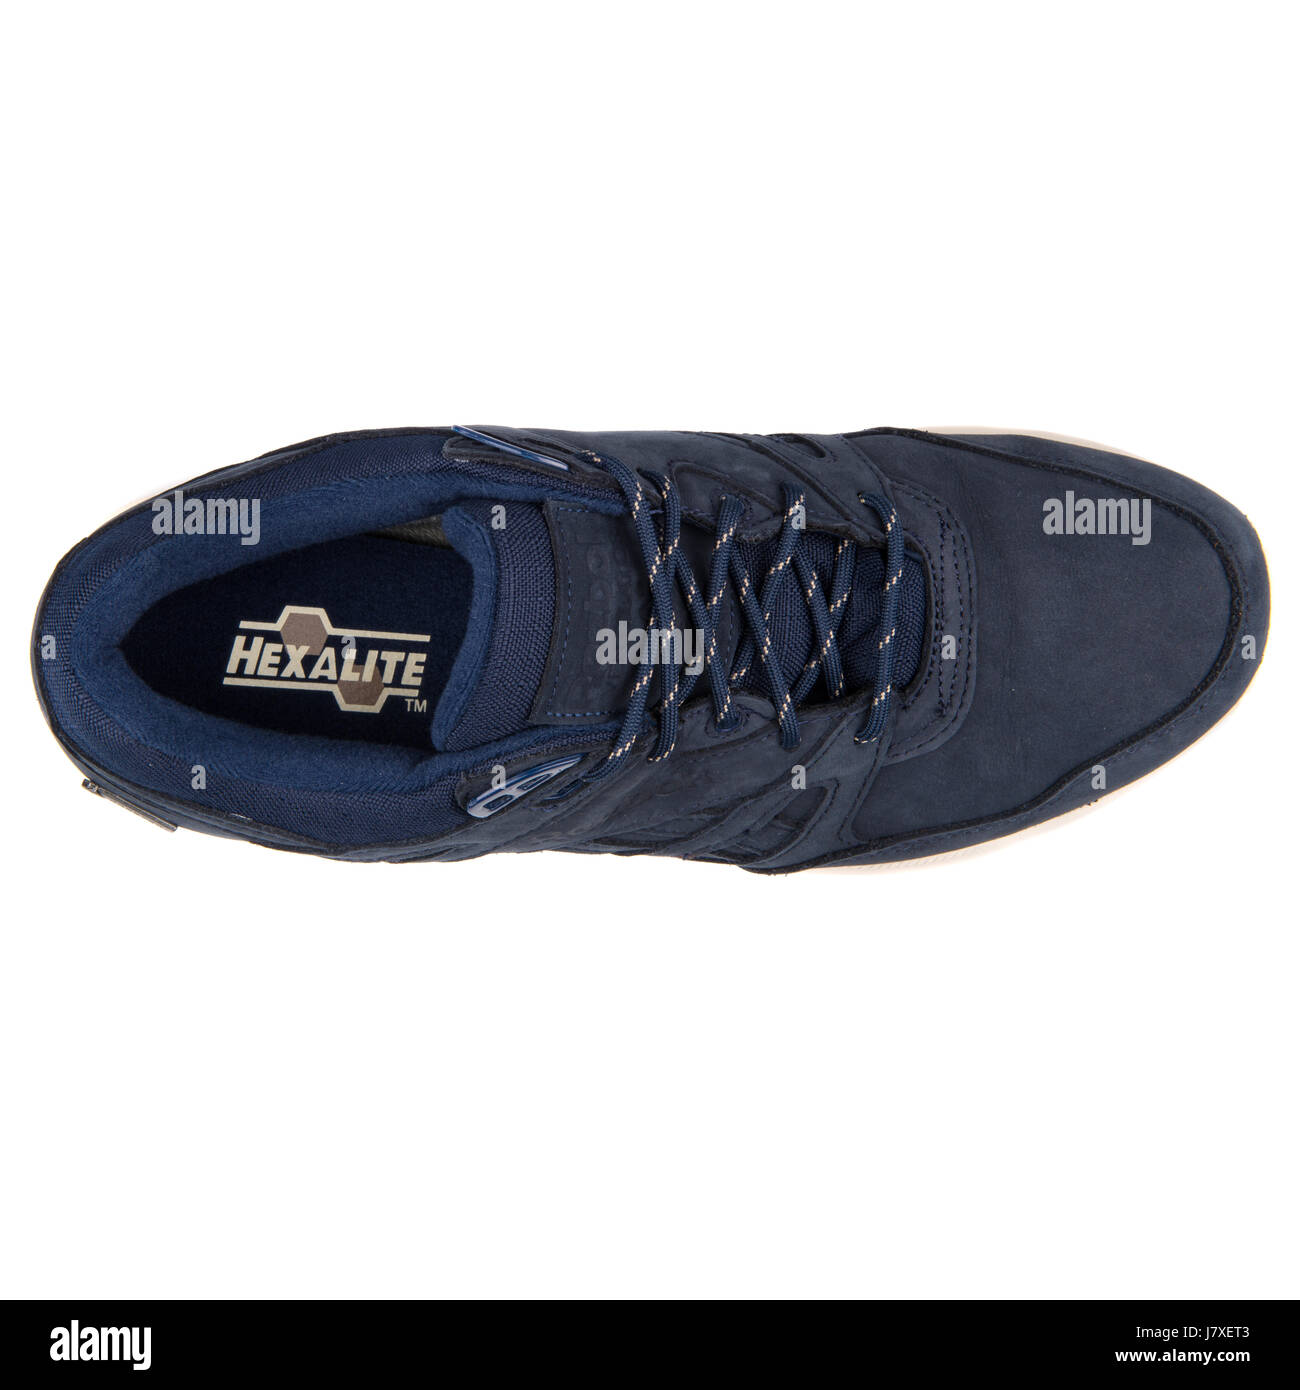 Reebok Ventilator Goretex Men's Classic azul índigo Walnut Leather Sneakers  - V66308 Fotografía de stock - Alamy